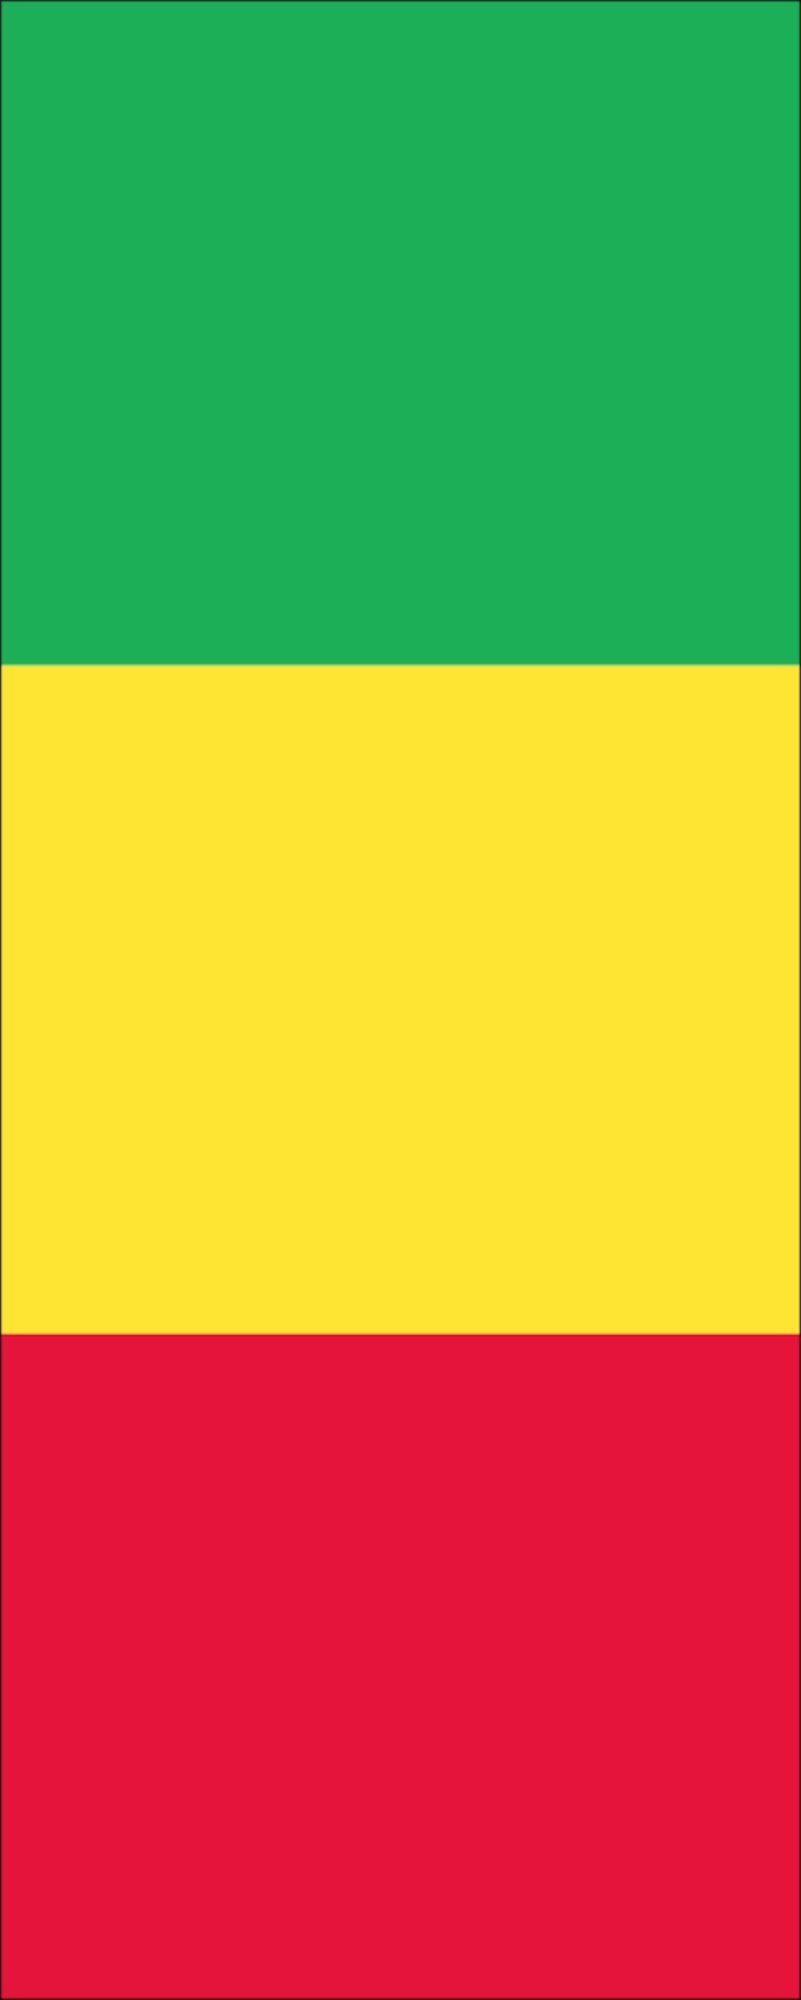 g/m² Mali Flagge flaggenmeer Hochformat 160